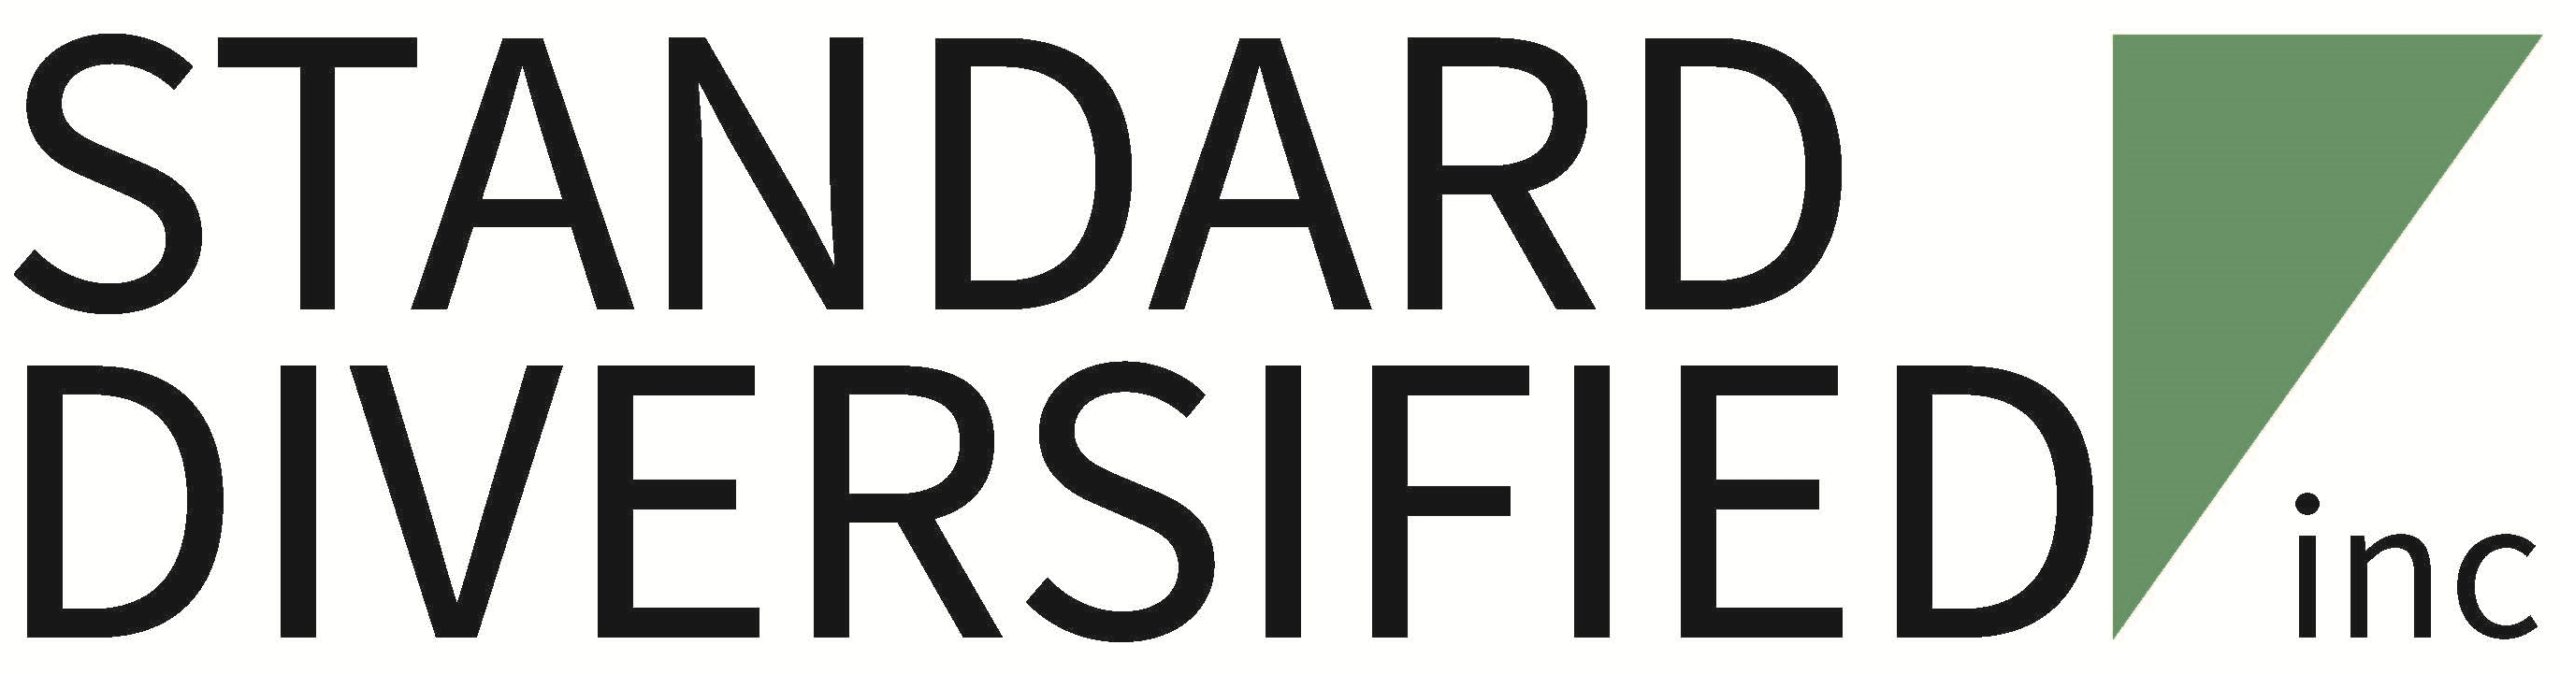 Standard Diversified logo